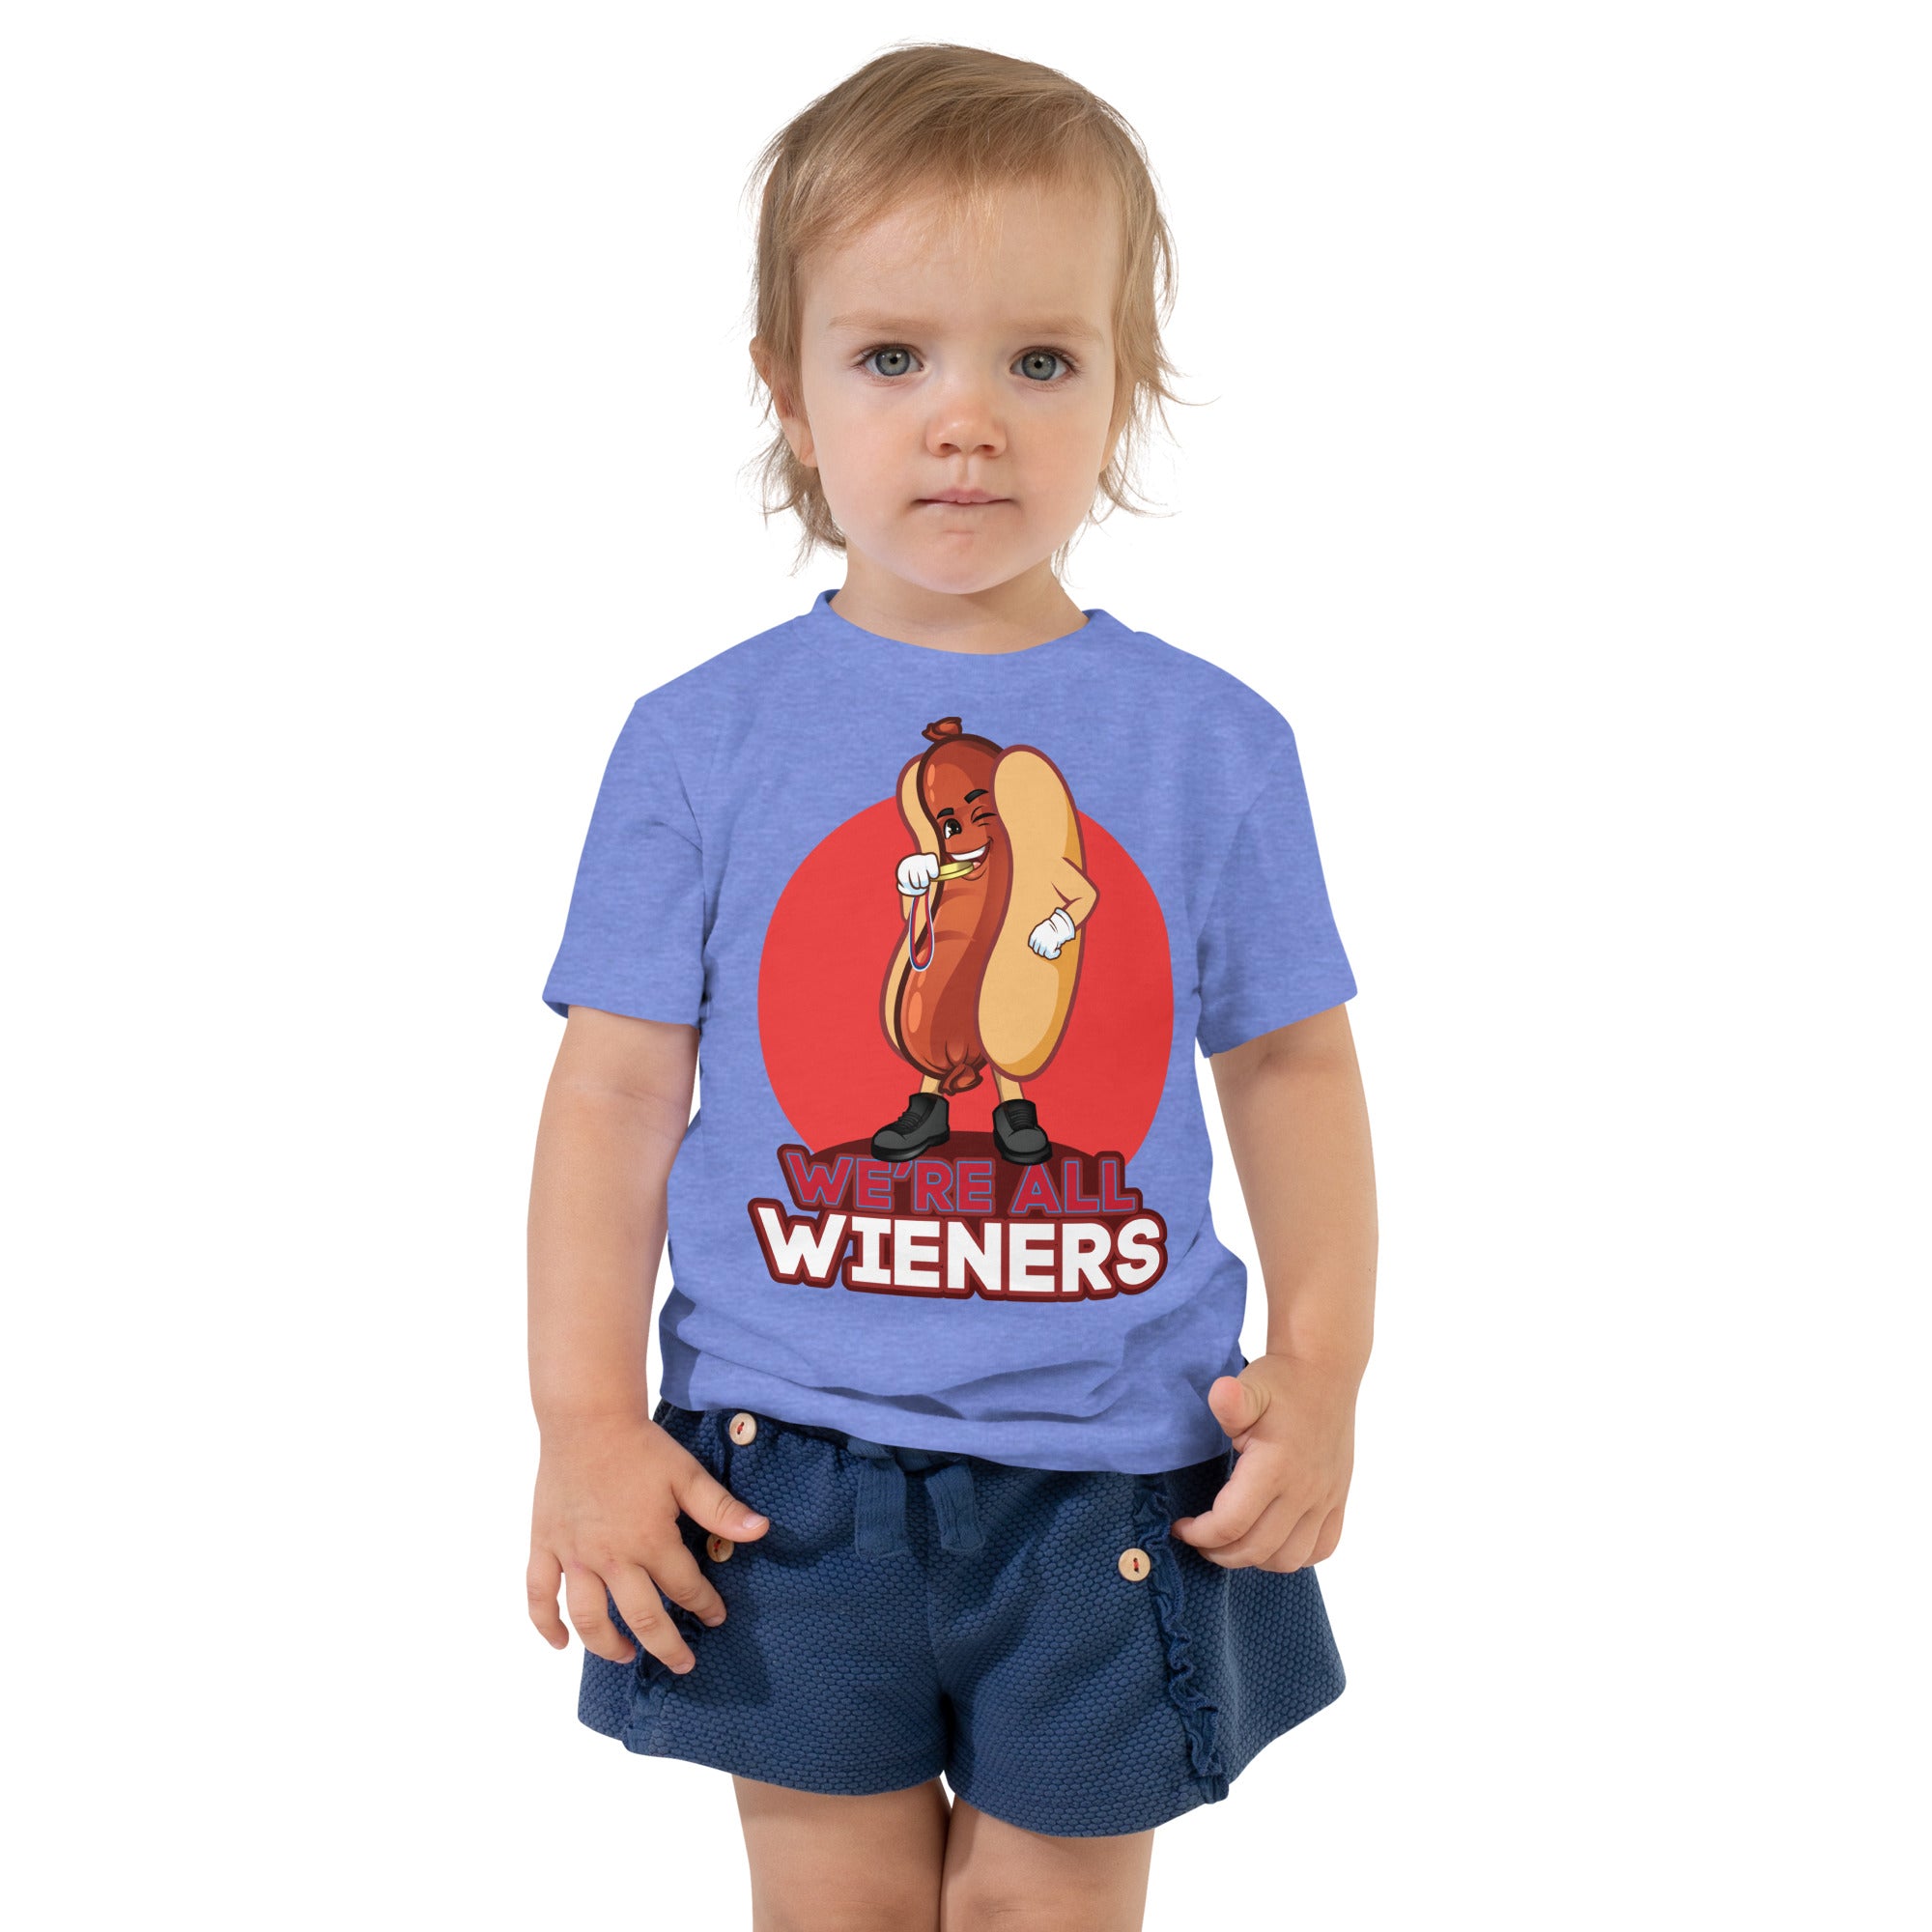 We're All Wieners - Toddler Short Sleeve Tee - Red